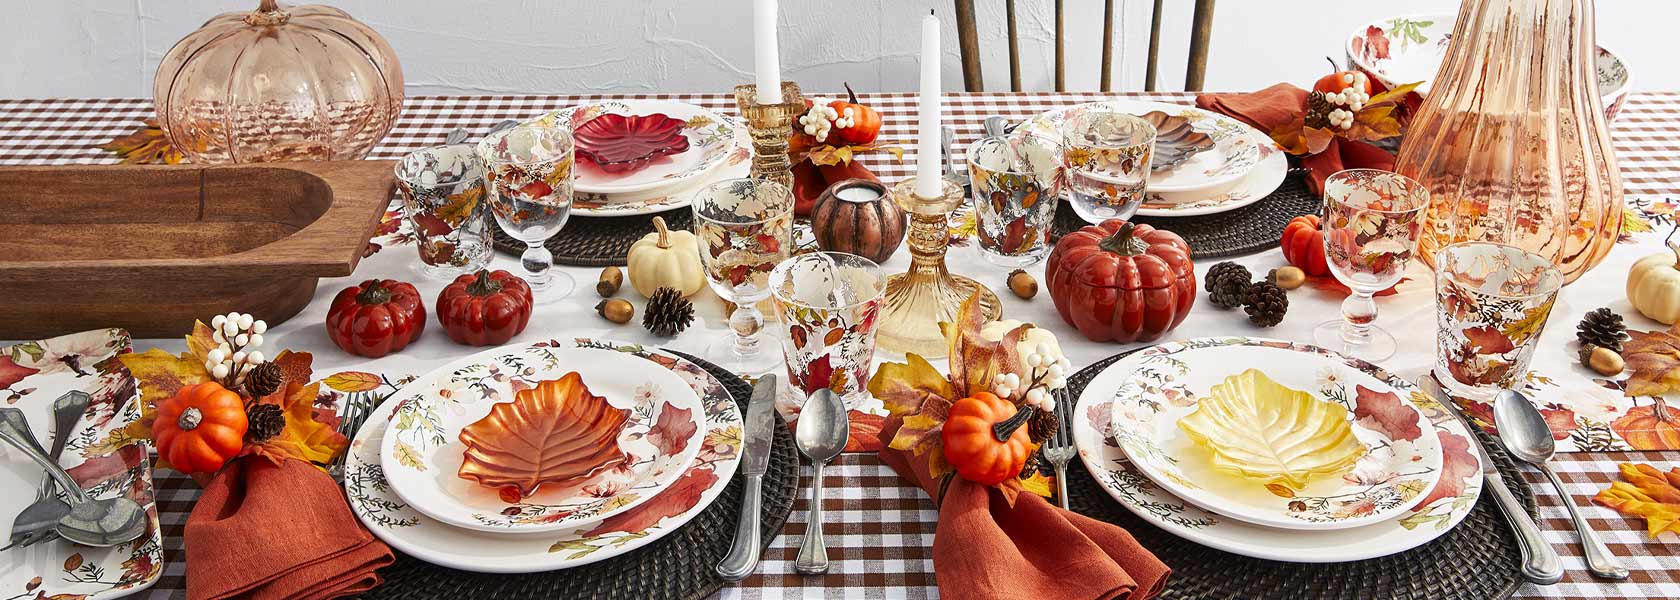 Fall Harvest dinnerware, linens and decor